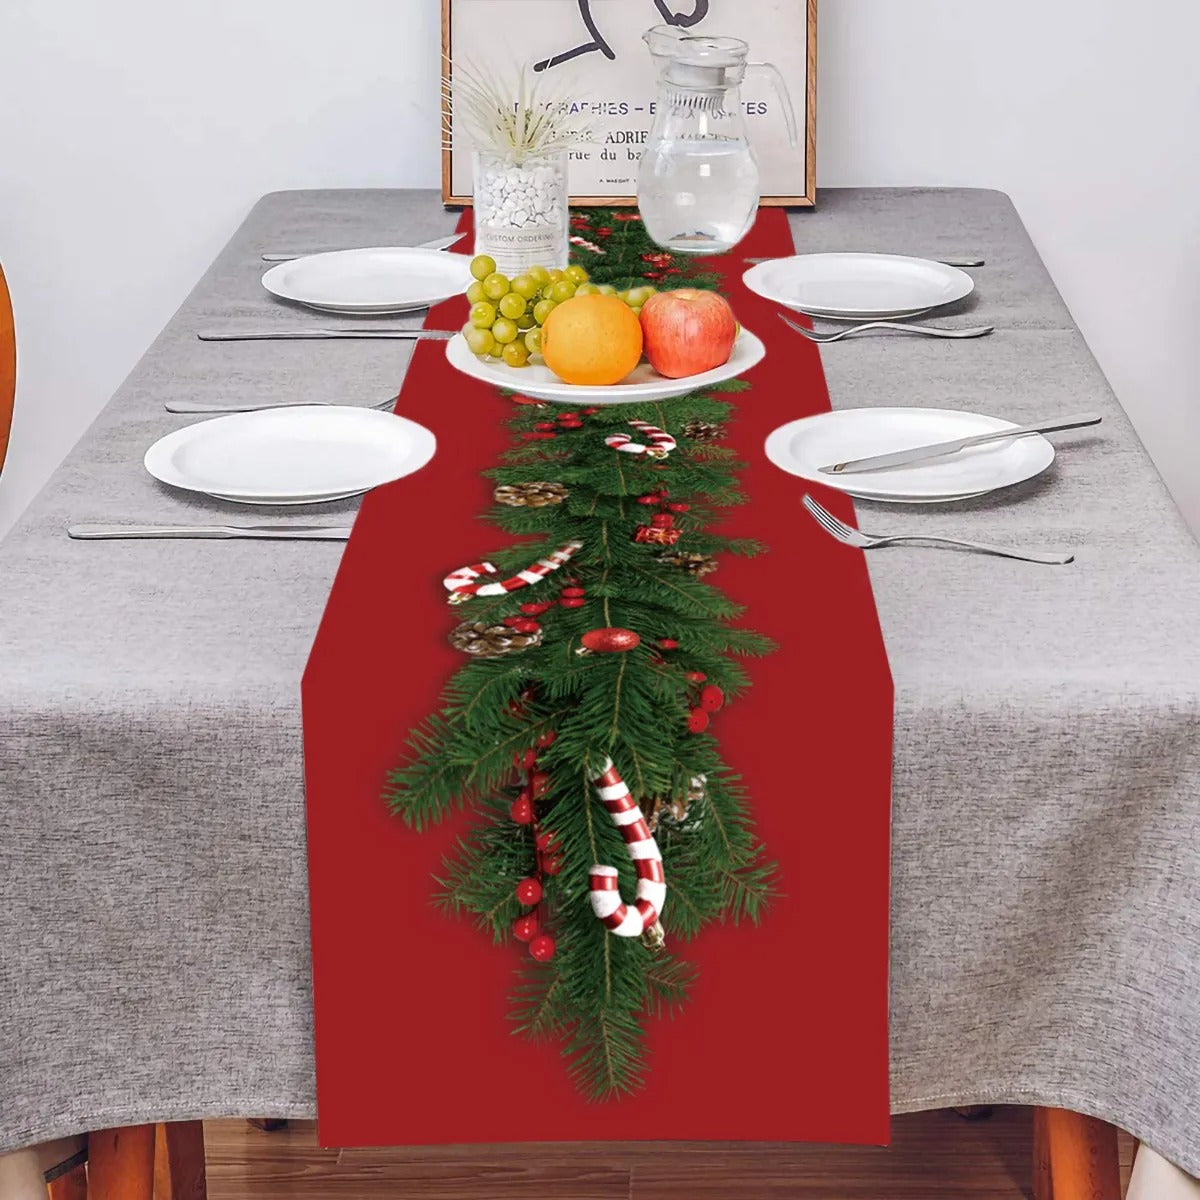 Christmas Table Runner Merry Christmas Decoration for Home